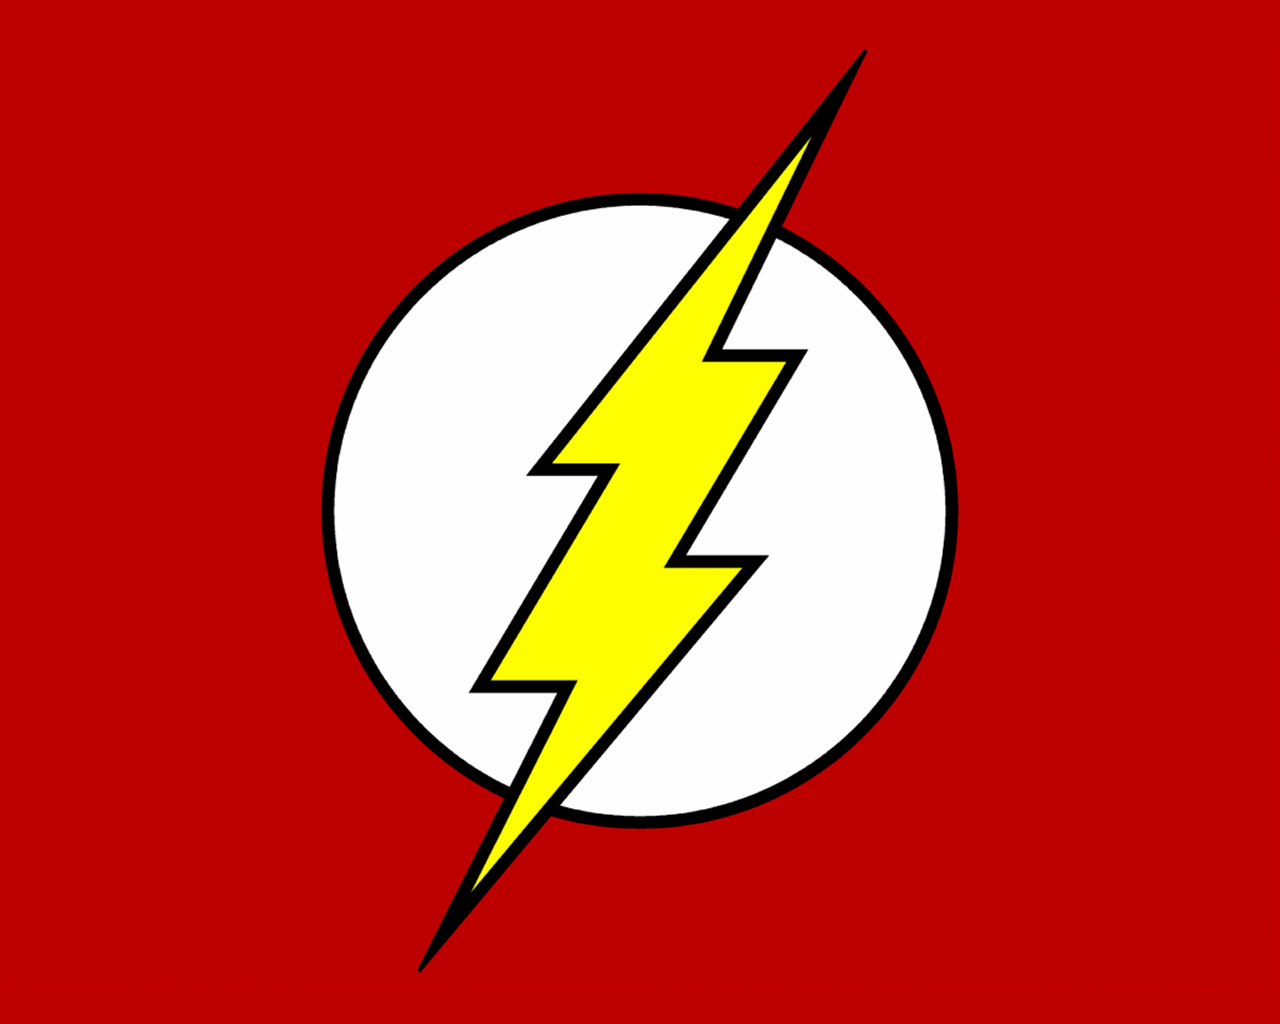 The Flash Symbol Wallpaper